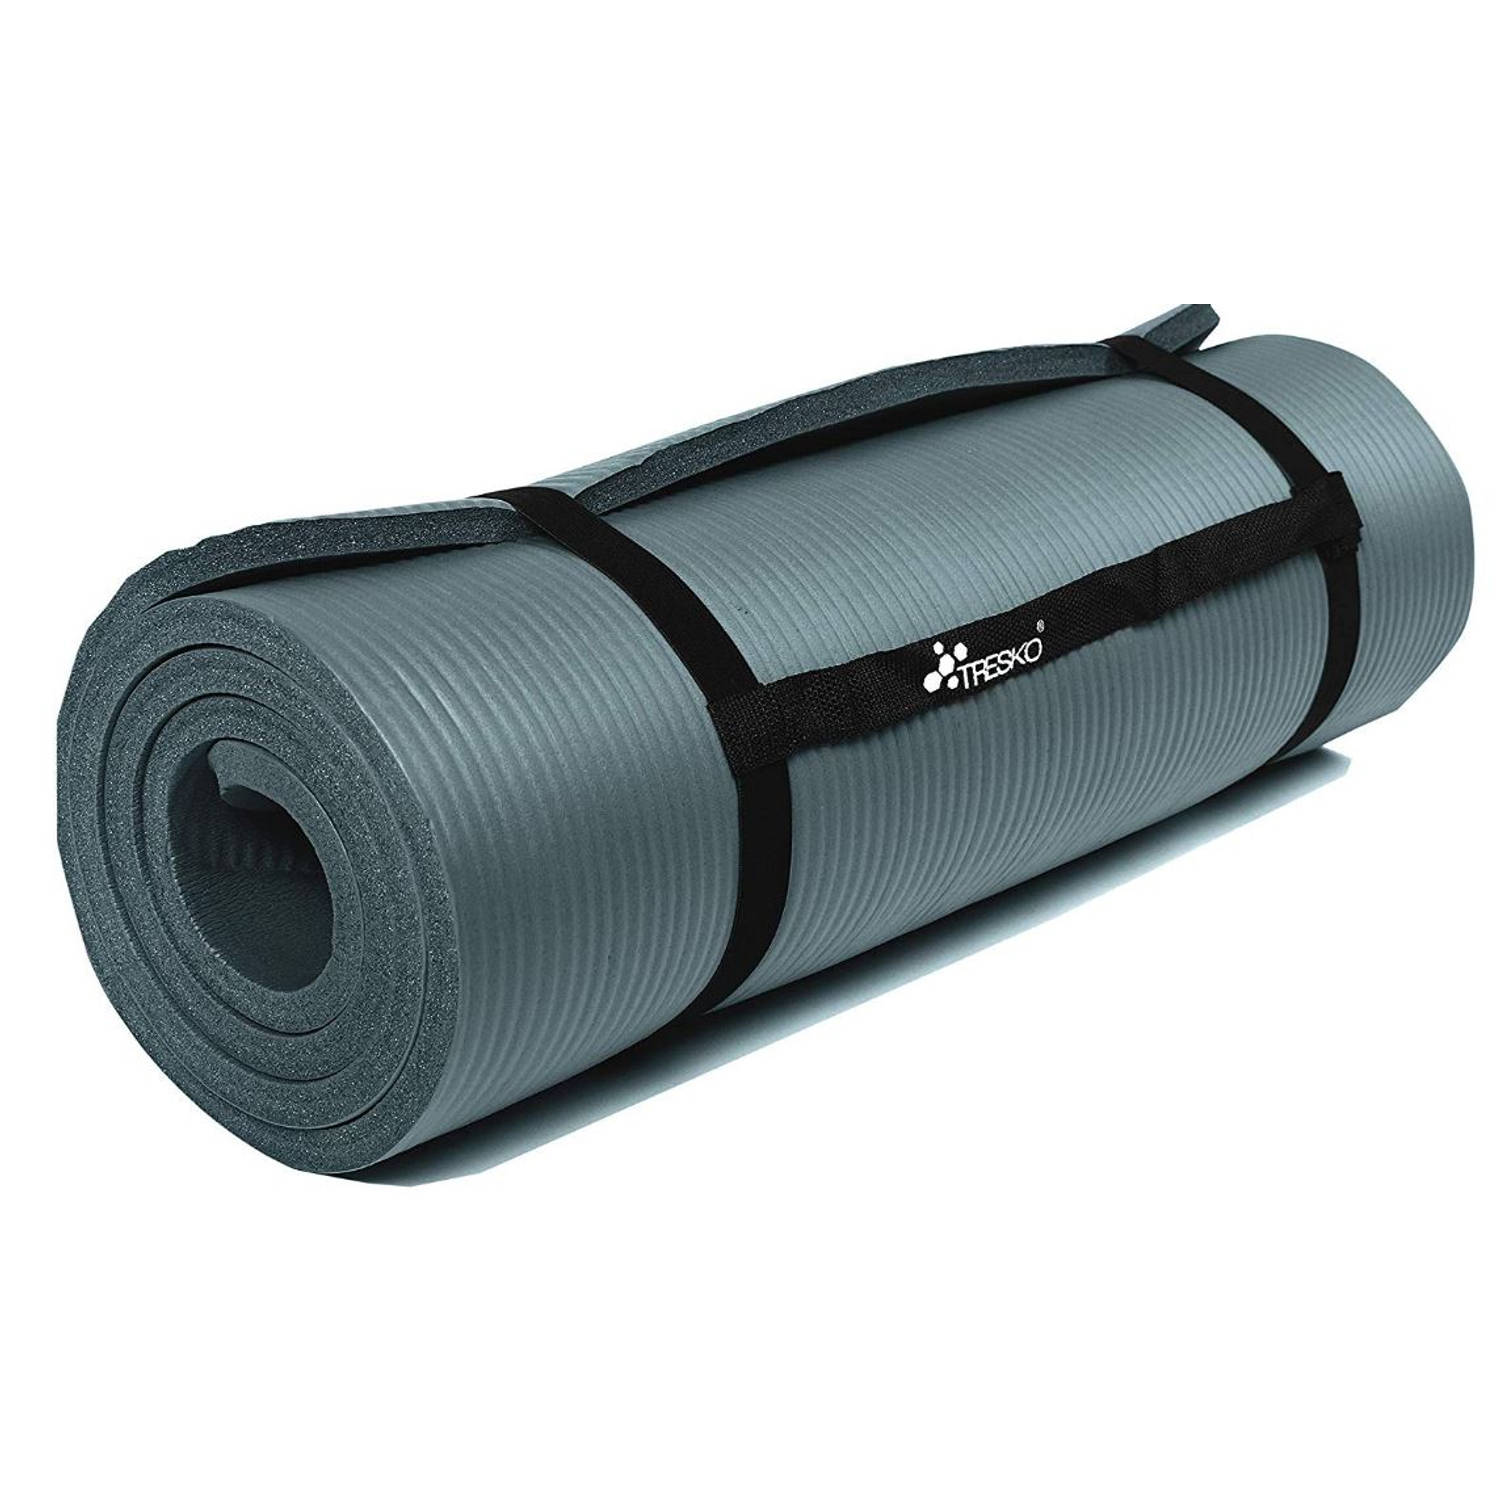 Yoga mat grijs-petrol 1,5 cm dik, fitnessmat, pilates, aerobics